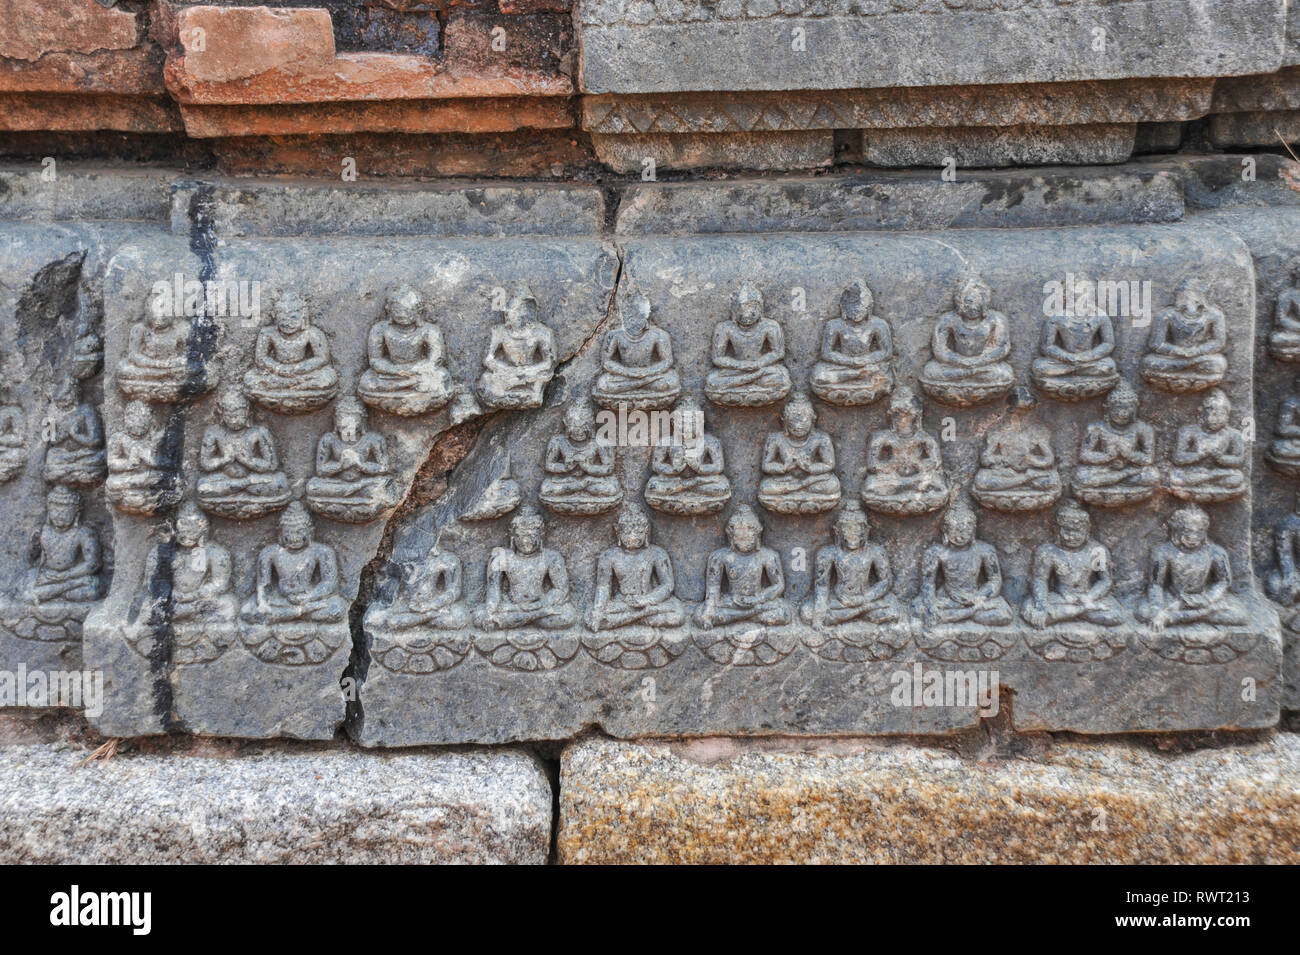 NALANDA, BIHAR, INDIA, Relief with Buddhas showing different spiritual gestures (mudras). Stock Photo